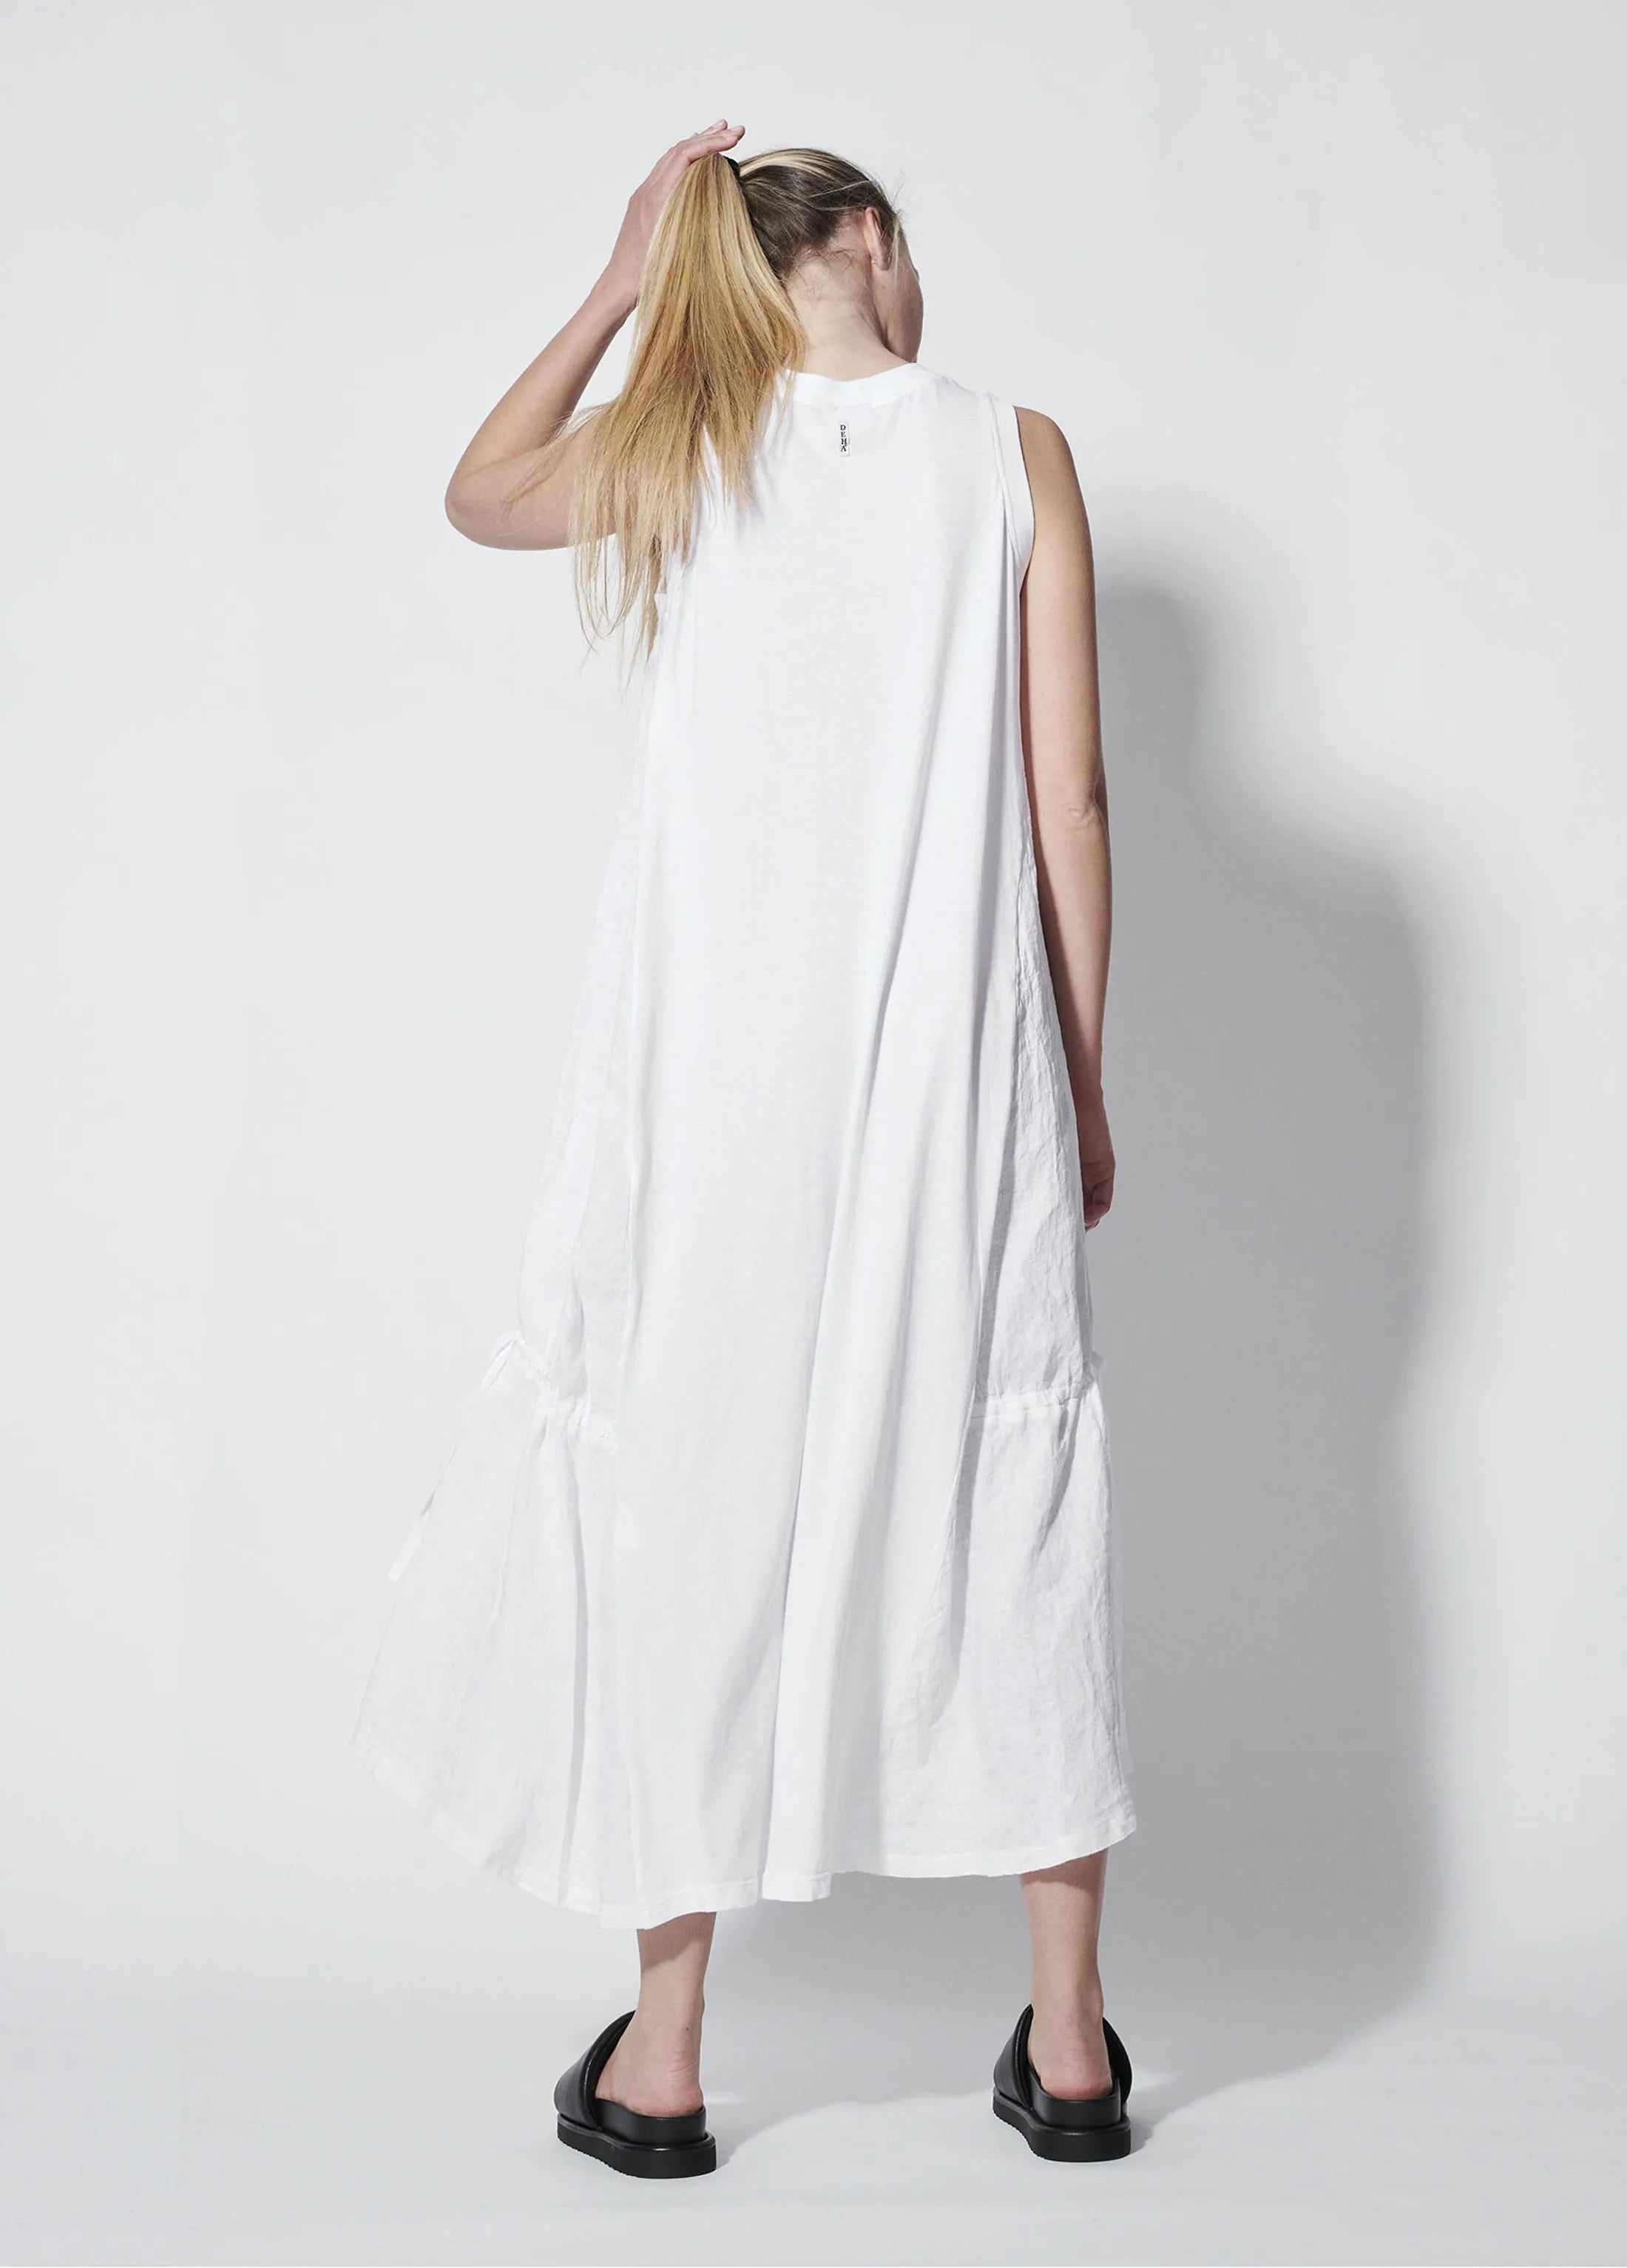 Adjustable long dress - white